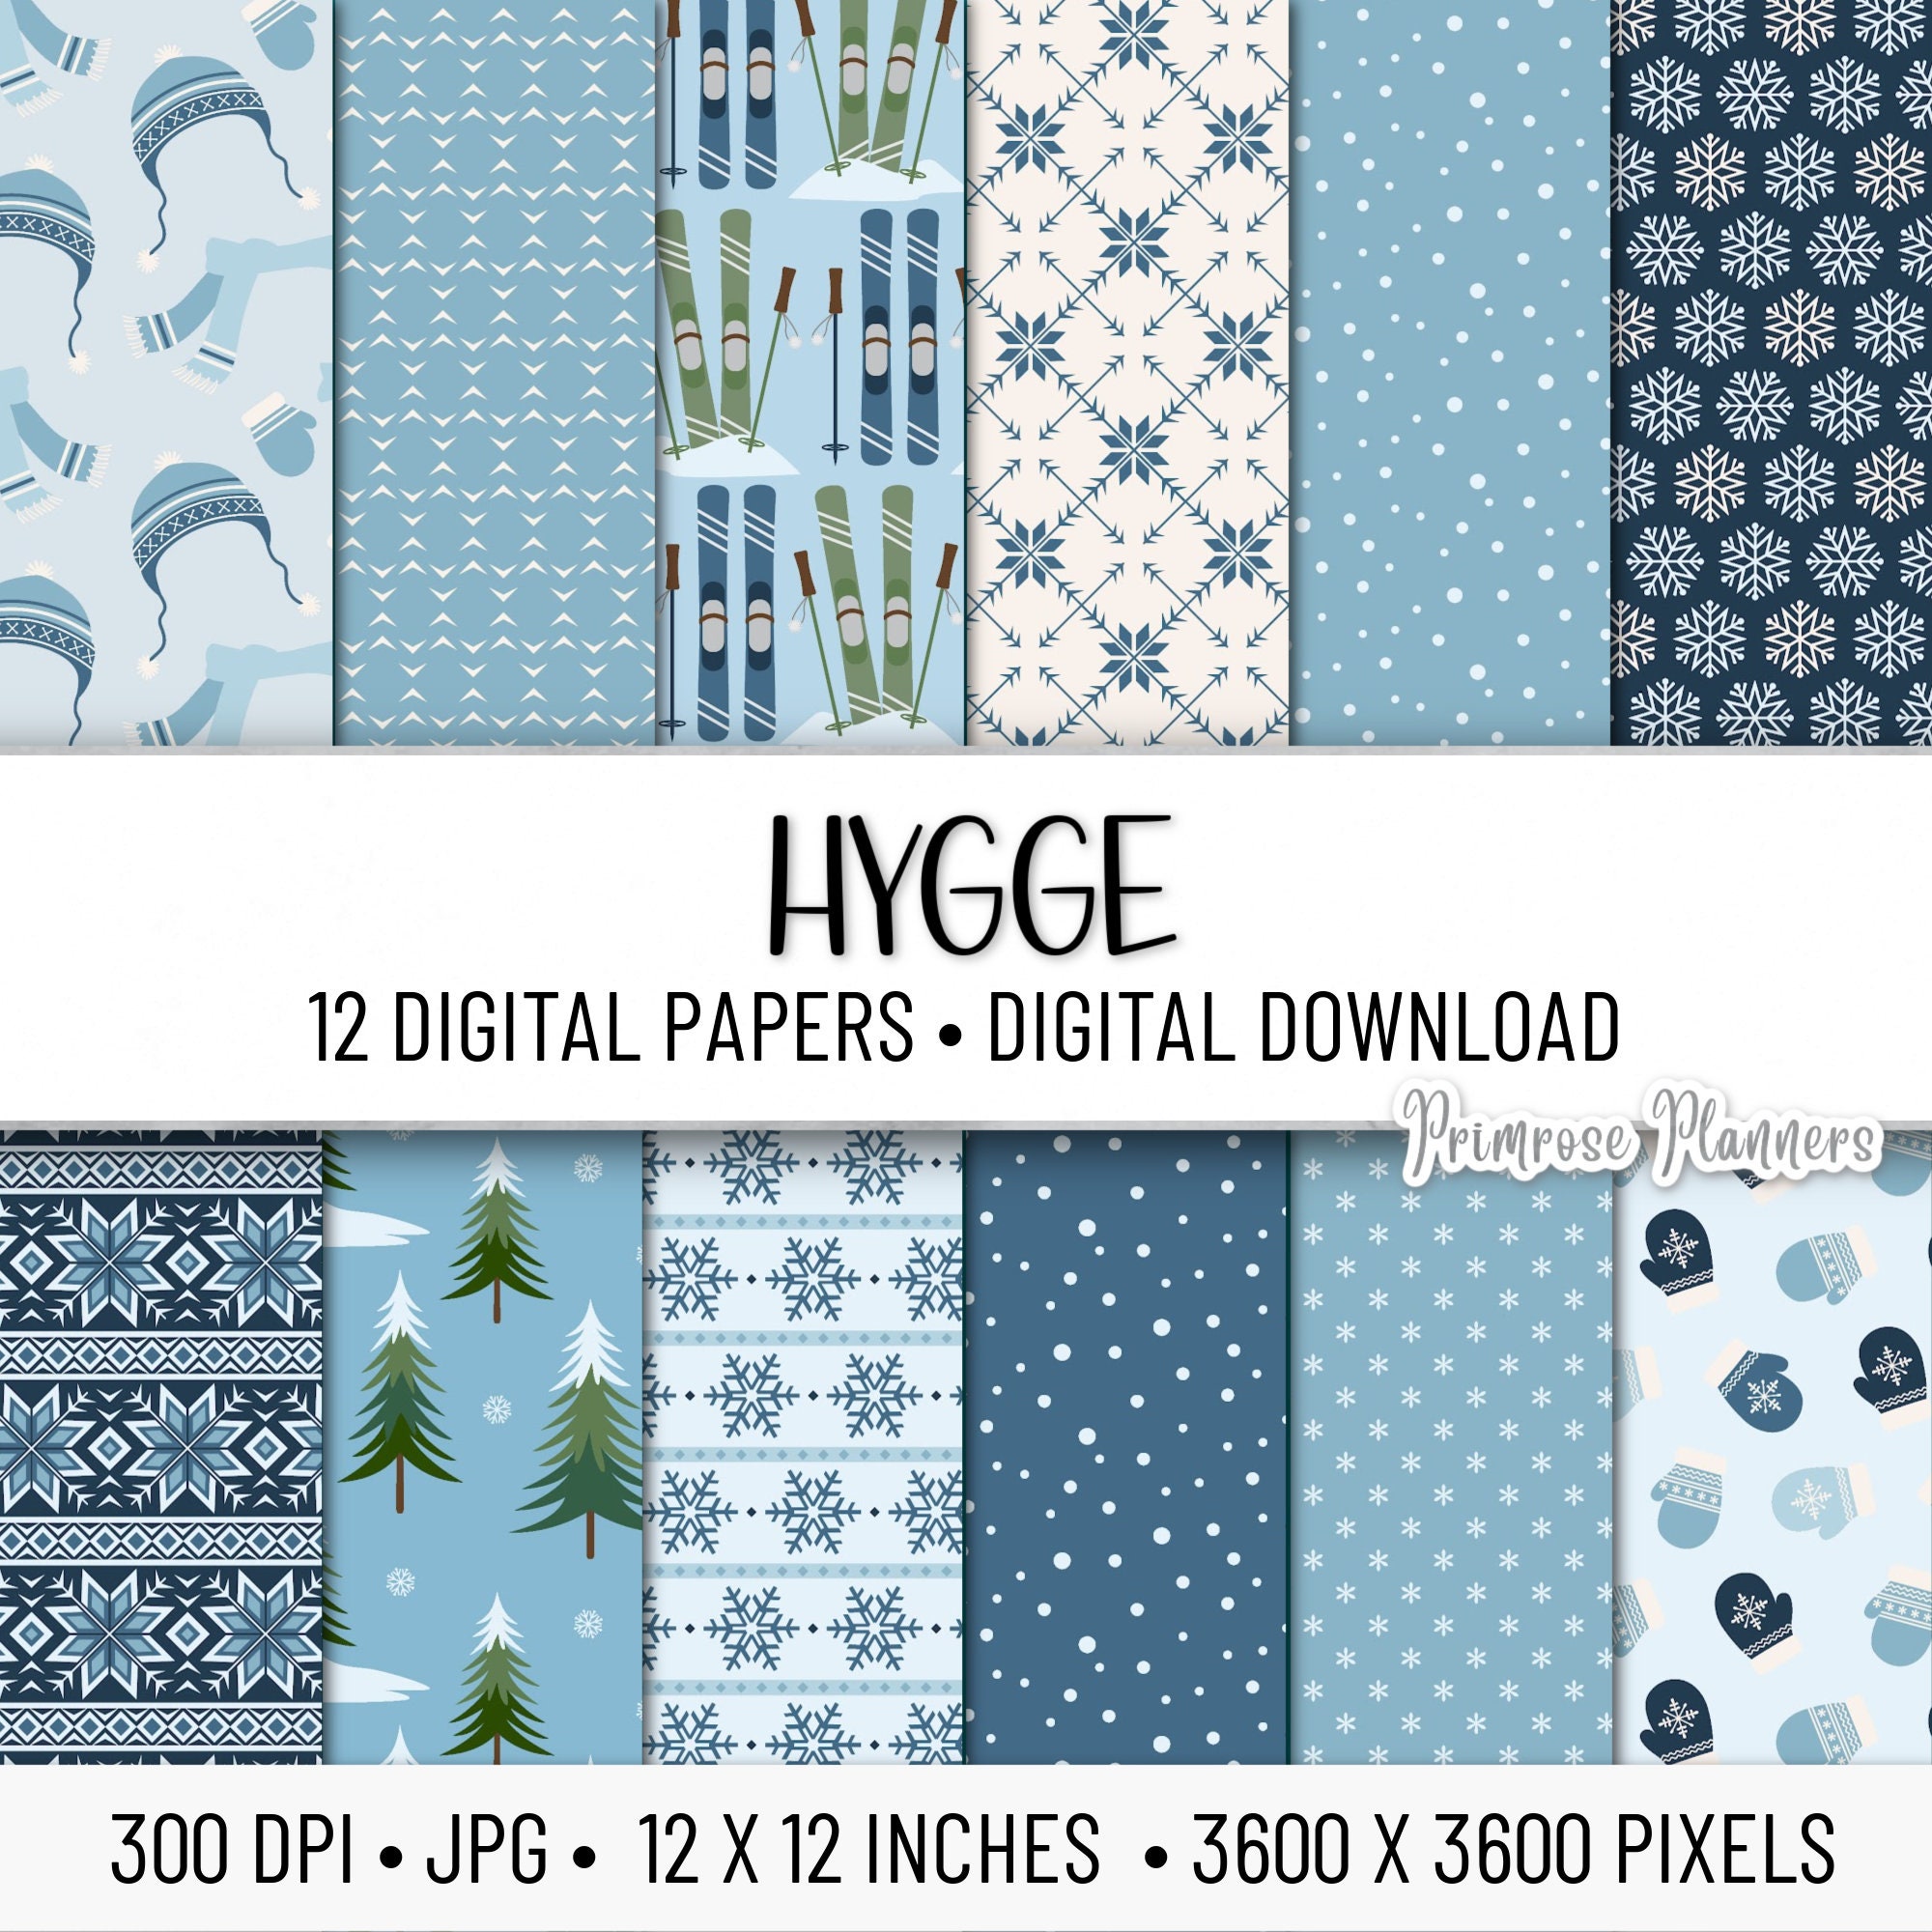 Winter Color Paper Pack Printable Paper Crafting Crafts Digital Download  Instant Download Digital Collage Sheet 8.5 X 11 Inch 001005 